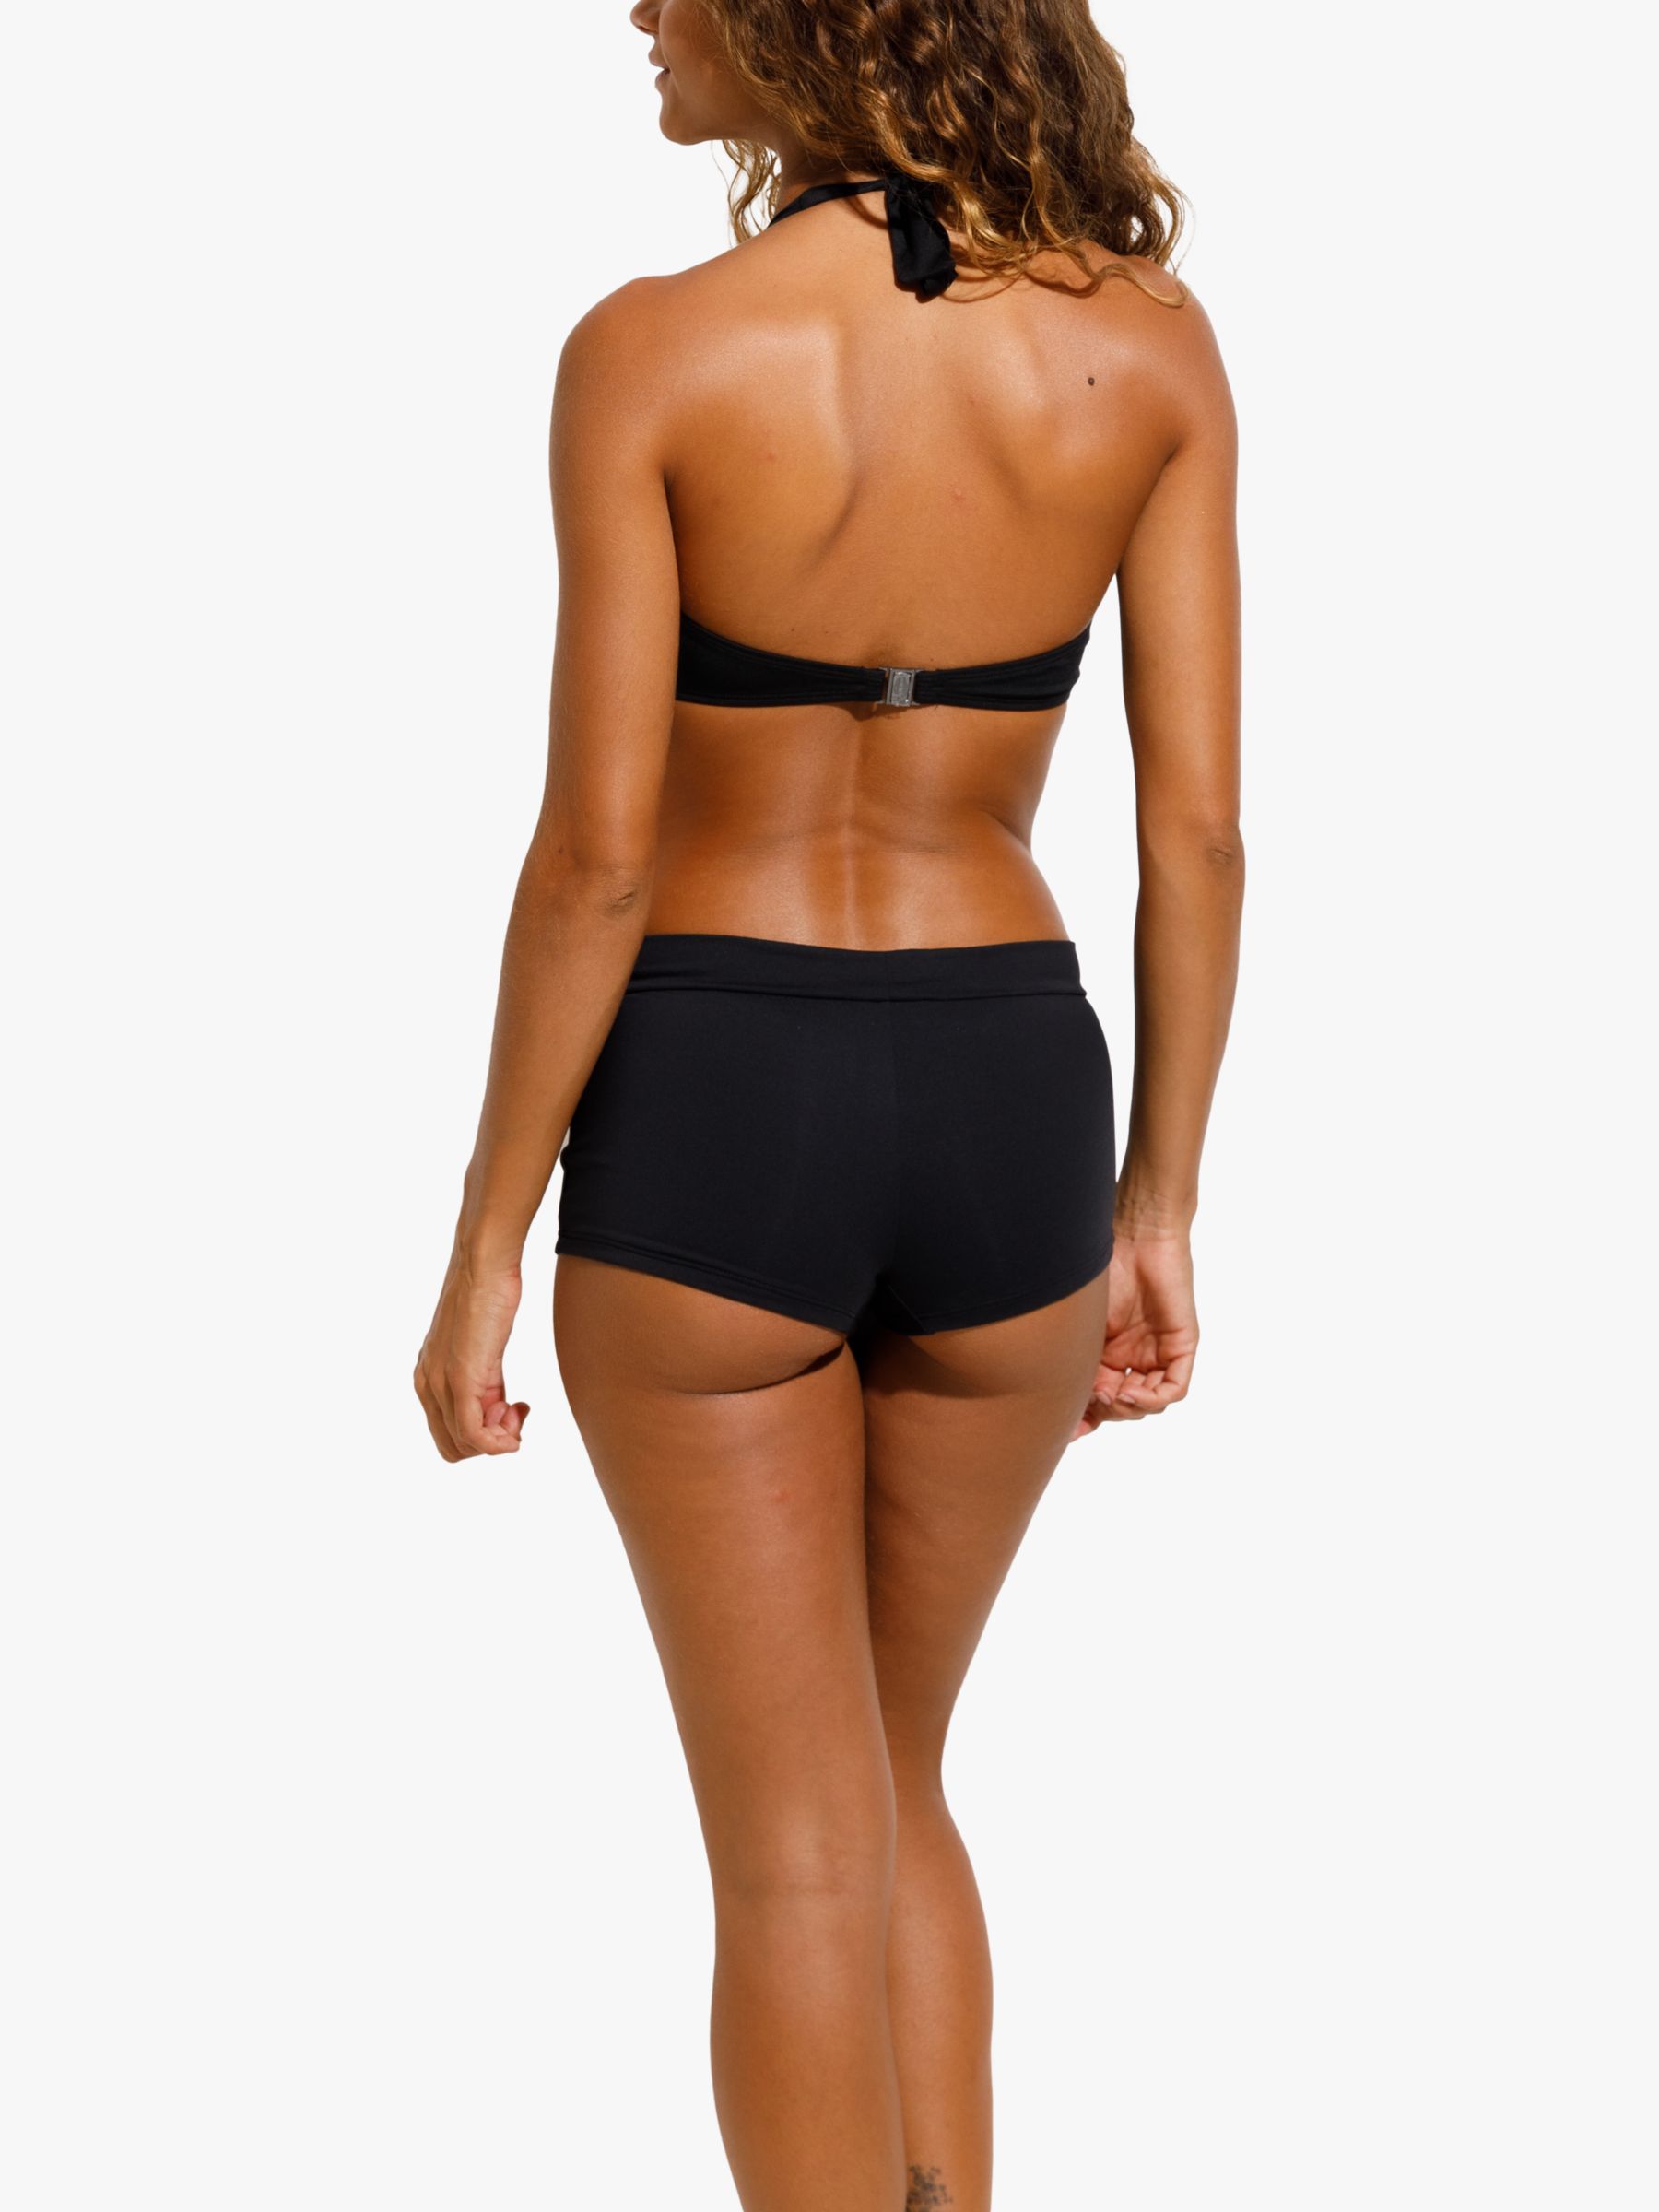 Panos Emporio Recycled Daphne Halterneck Bikini Top, Black, 8